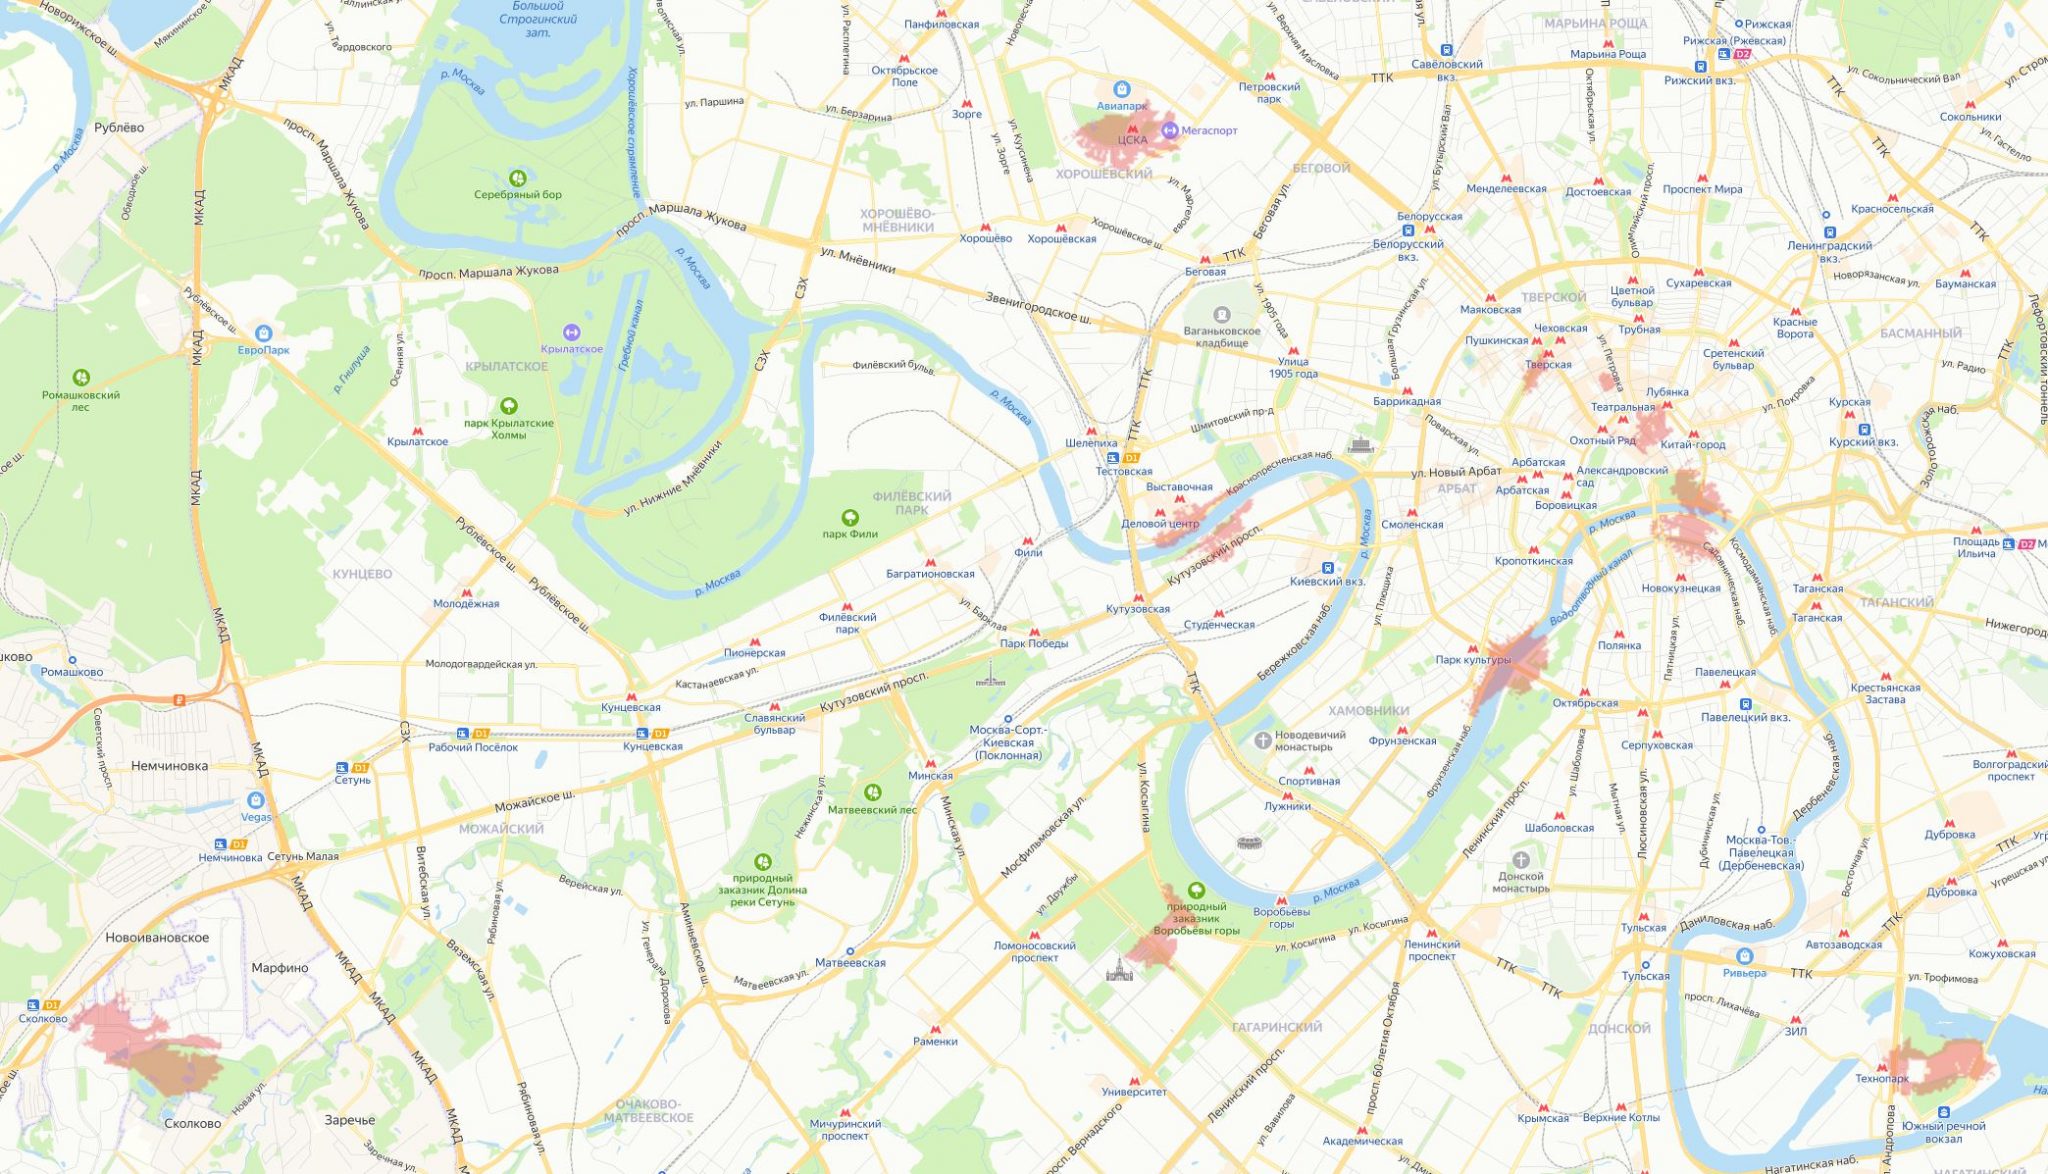 Зоне 5 b. Вышки 5g в Москве на карте. Пятая зона Москвы. Карта покрытия 5g в Москве.